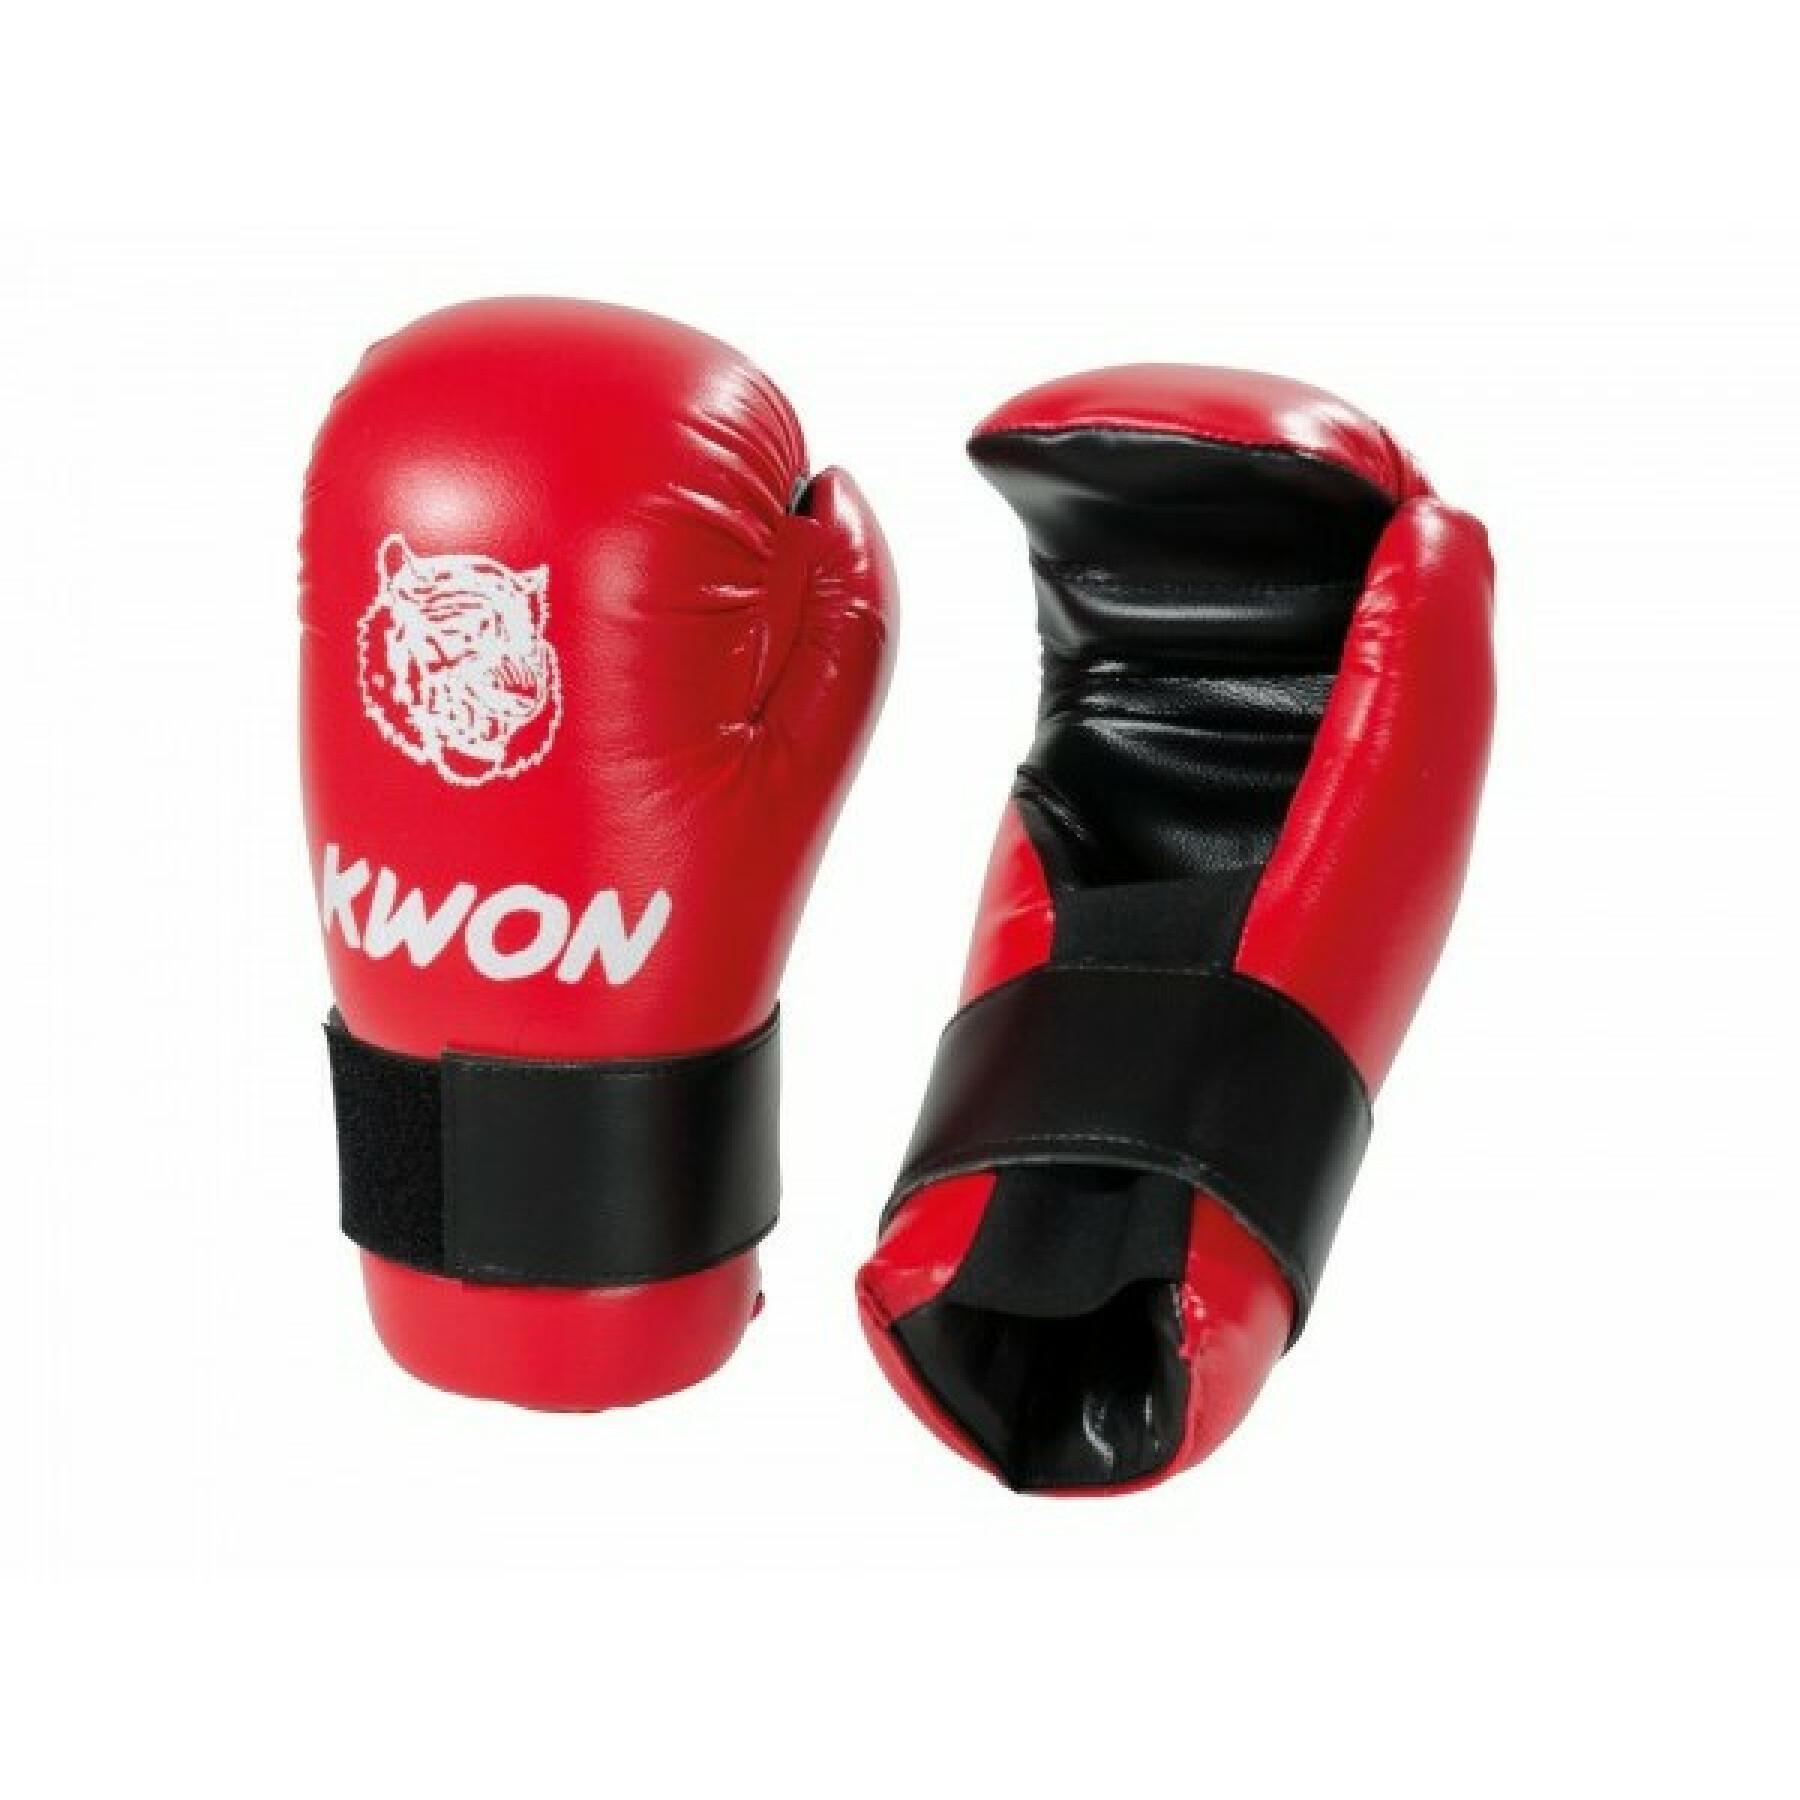 Thai boxing gloves for children Kwon Anatomic Tiger